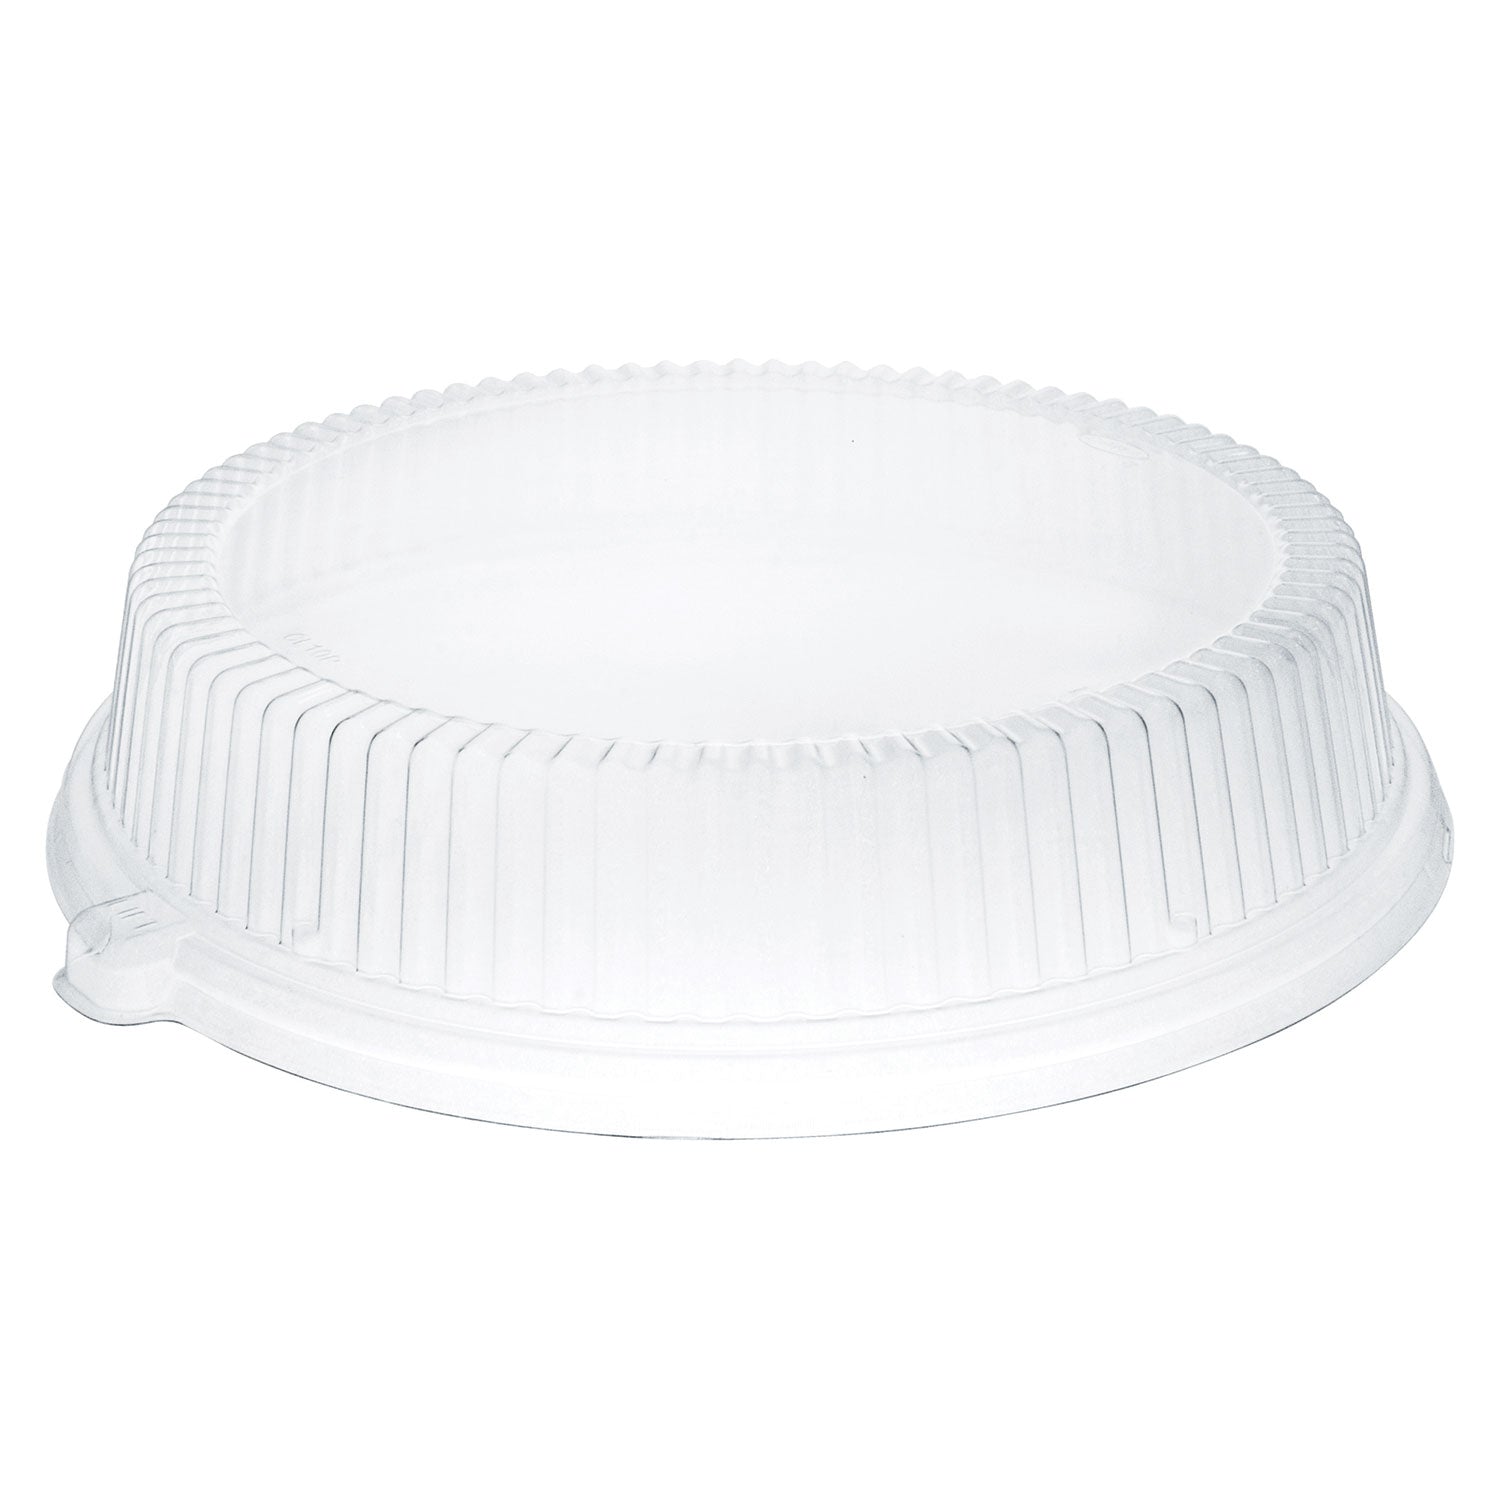 dome-covers-fit-10-disposable-plates-clear-plastic-500-carton_dcccl10p - 1